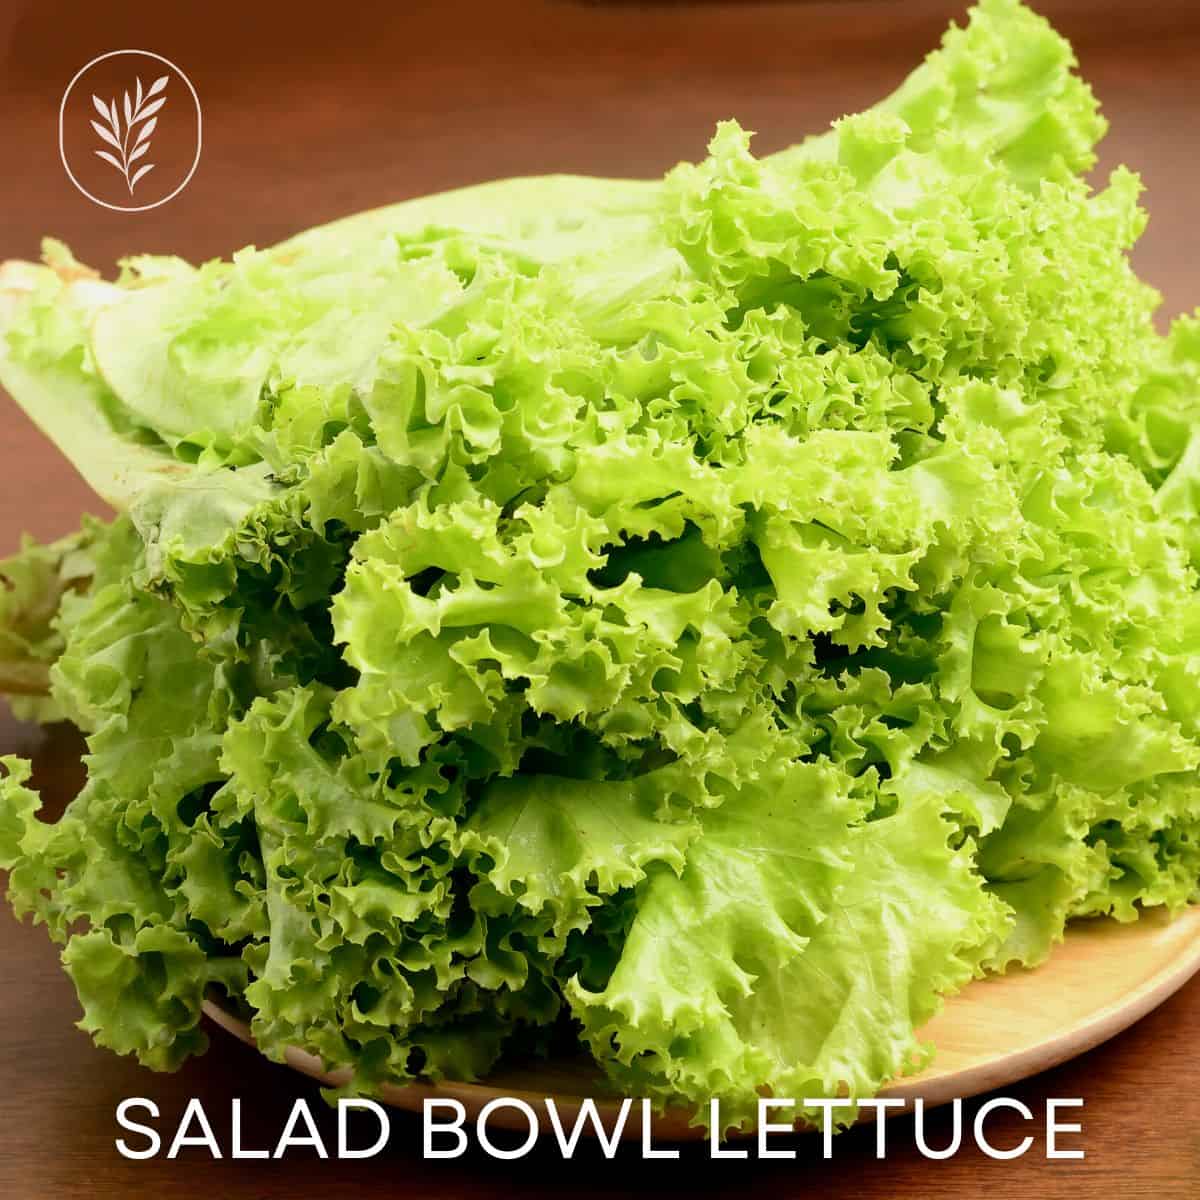 Salad bowl lettuce via @home4theharvest